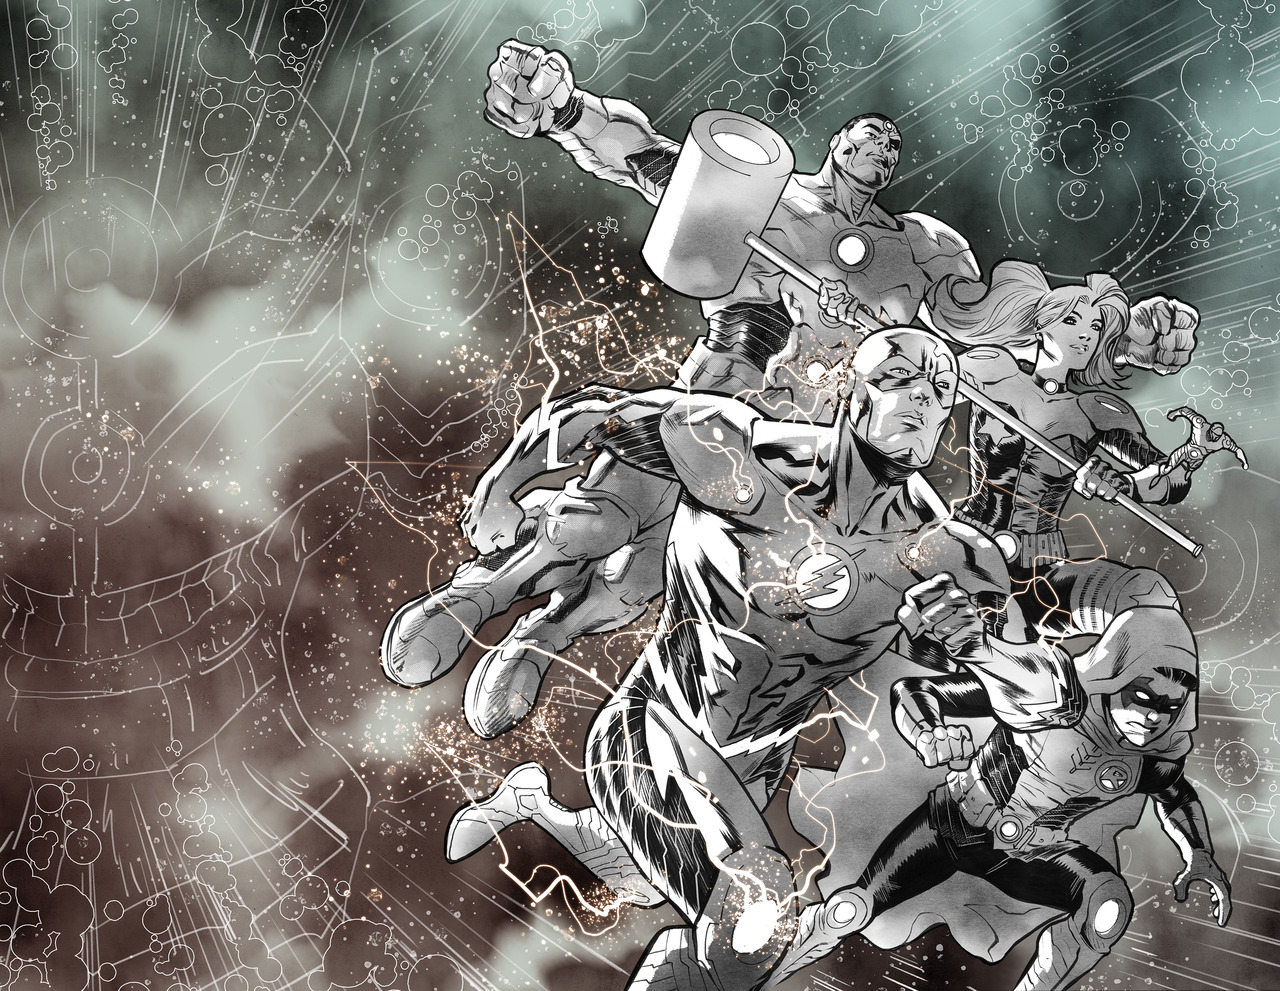 Justice League: No Justice #4 avec la team Wisdom, cover par Francis Manapul